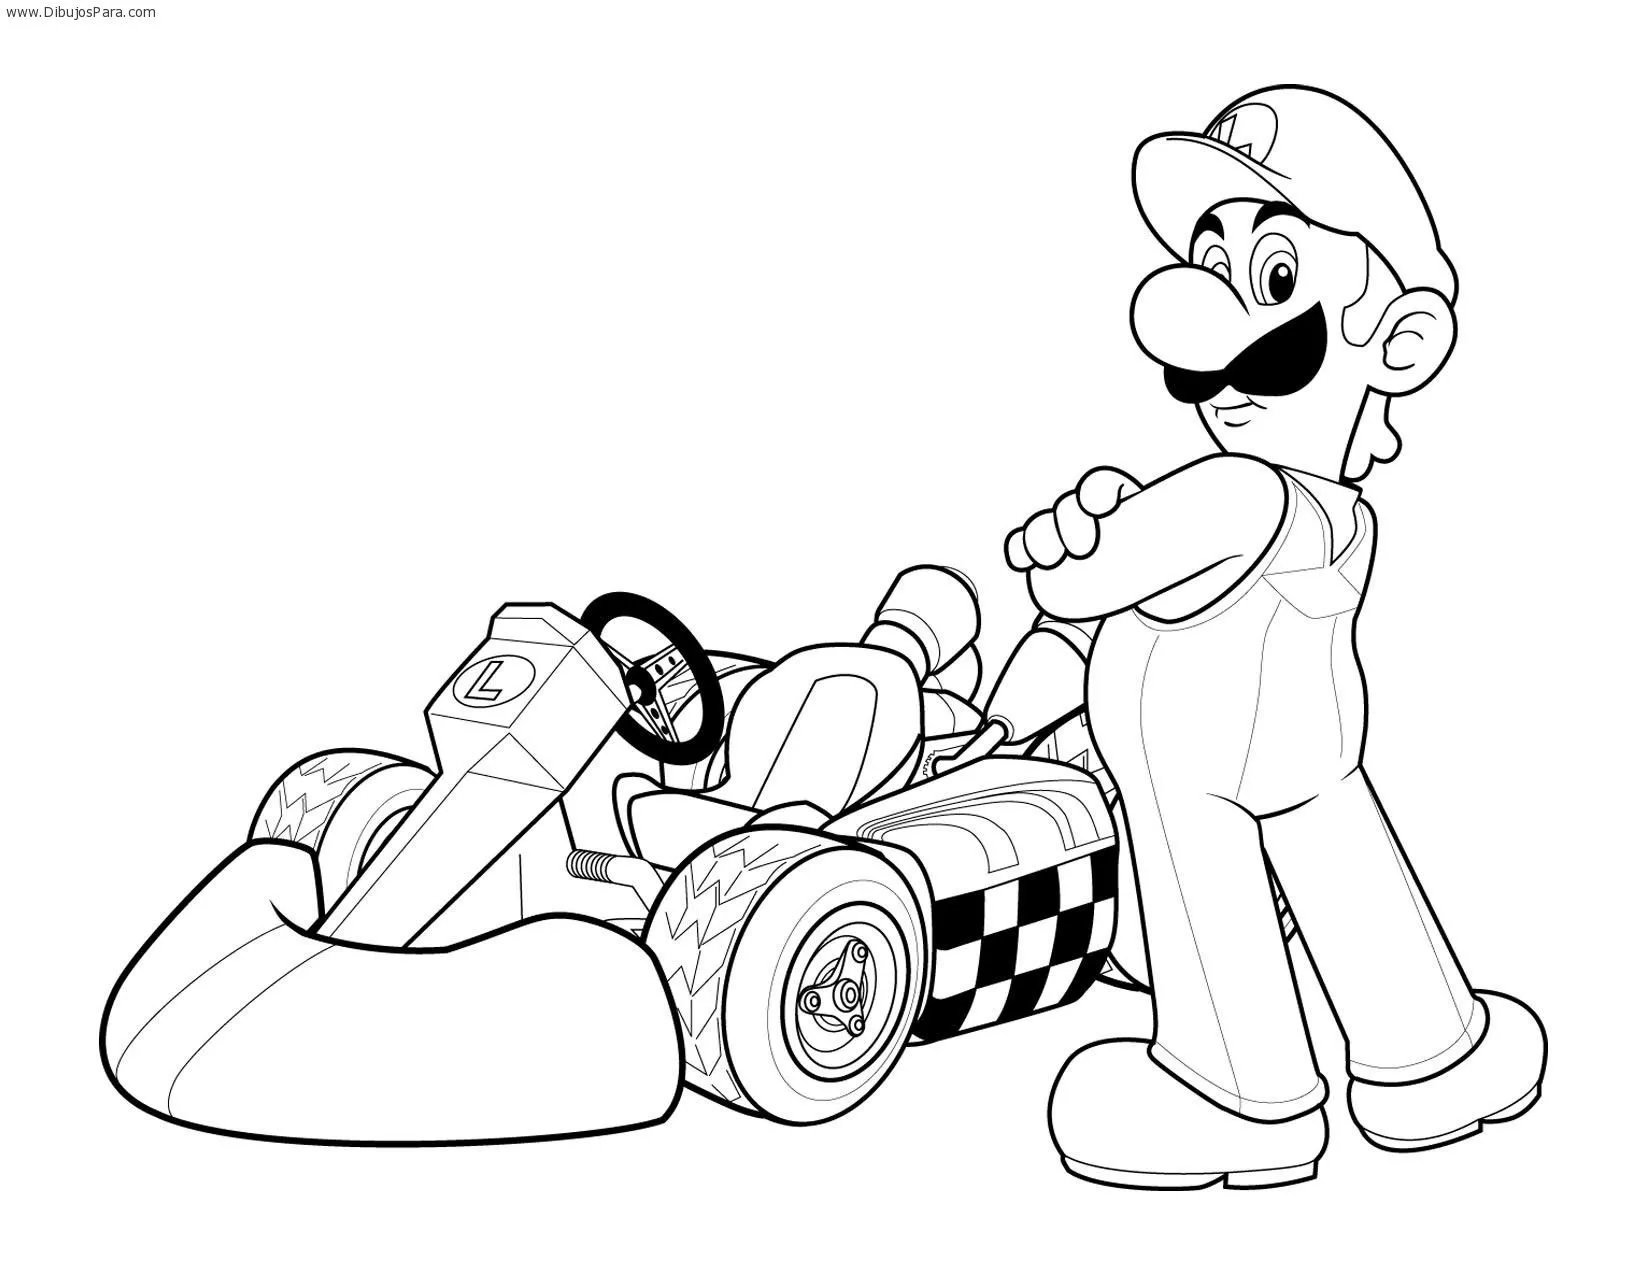  ... de Luigi | Dibujos de Karting para Pintar | Dibujos para Colorear